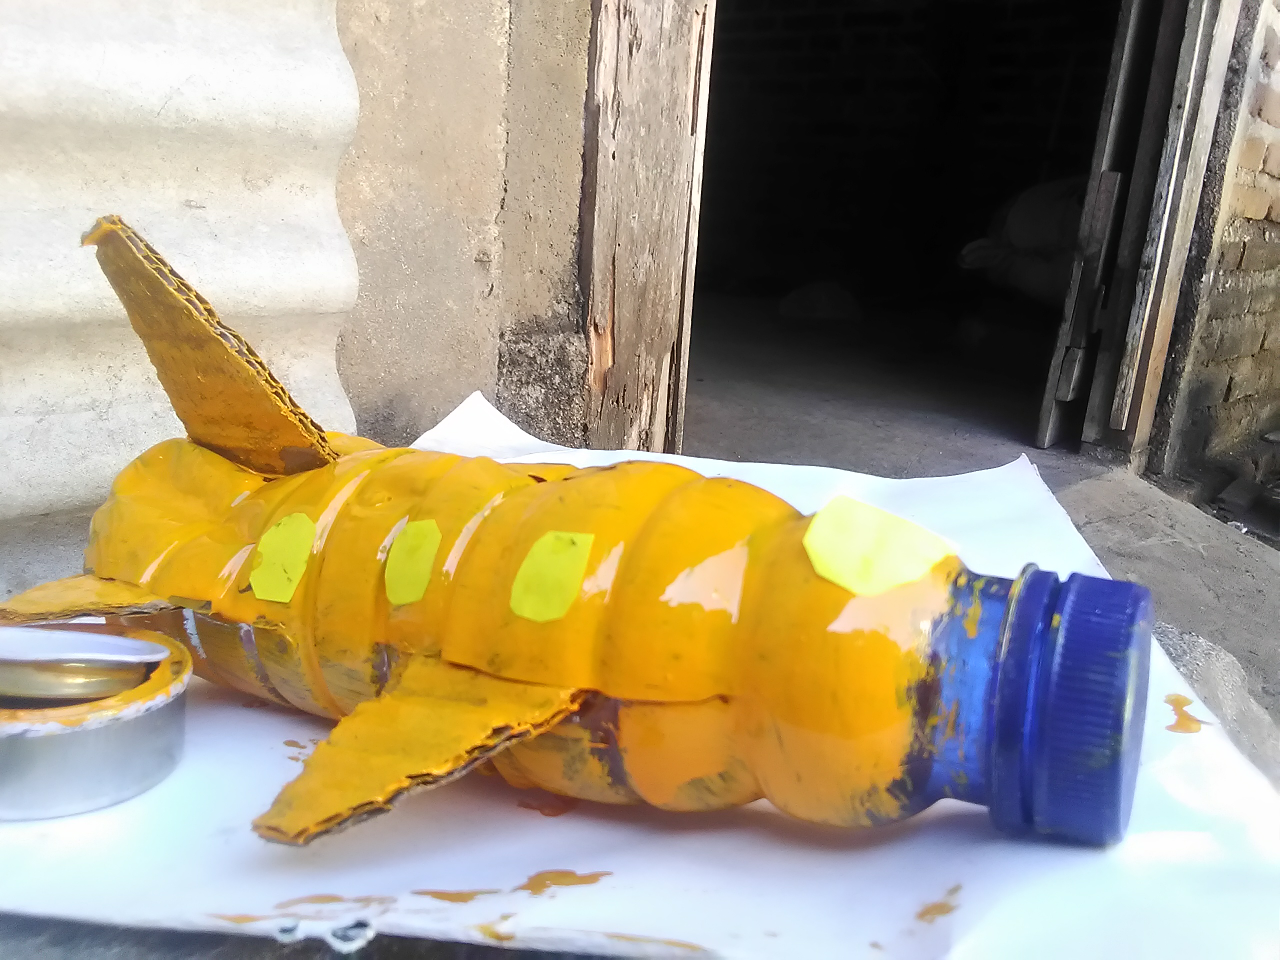  Membuat  Pesawat  Mainan Dari  Botol  Bekas  Air Mineral KASKUS